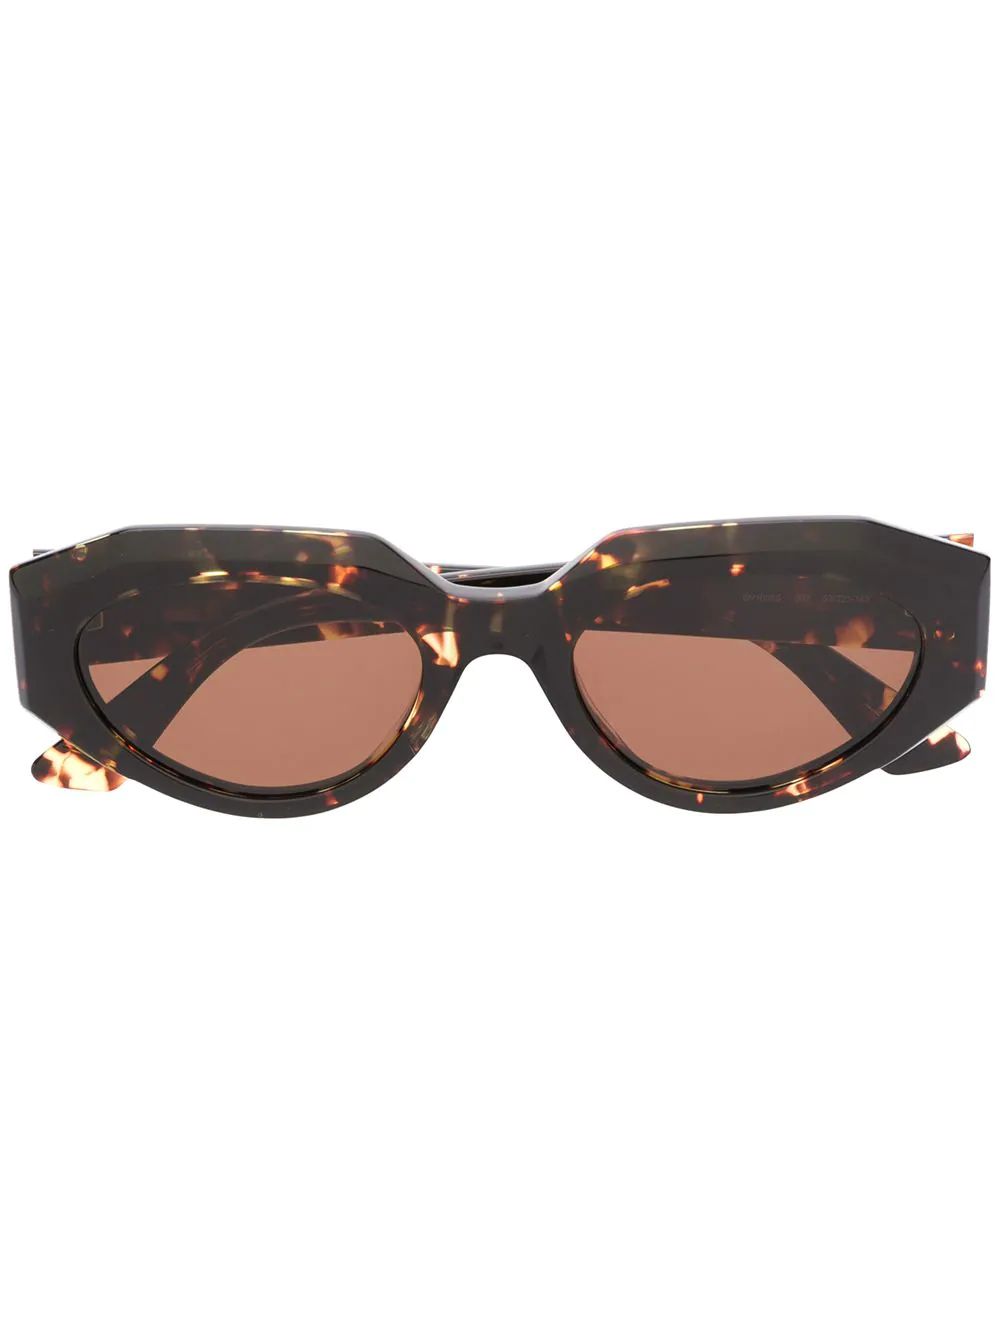 Bottega Veneta Eyewear Tortoiseshell Oval Sunglasses - Farfetch | Farfetch Global